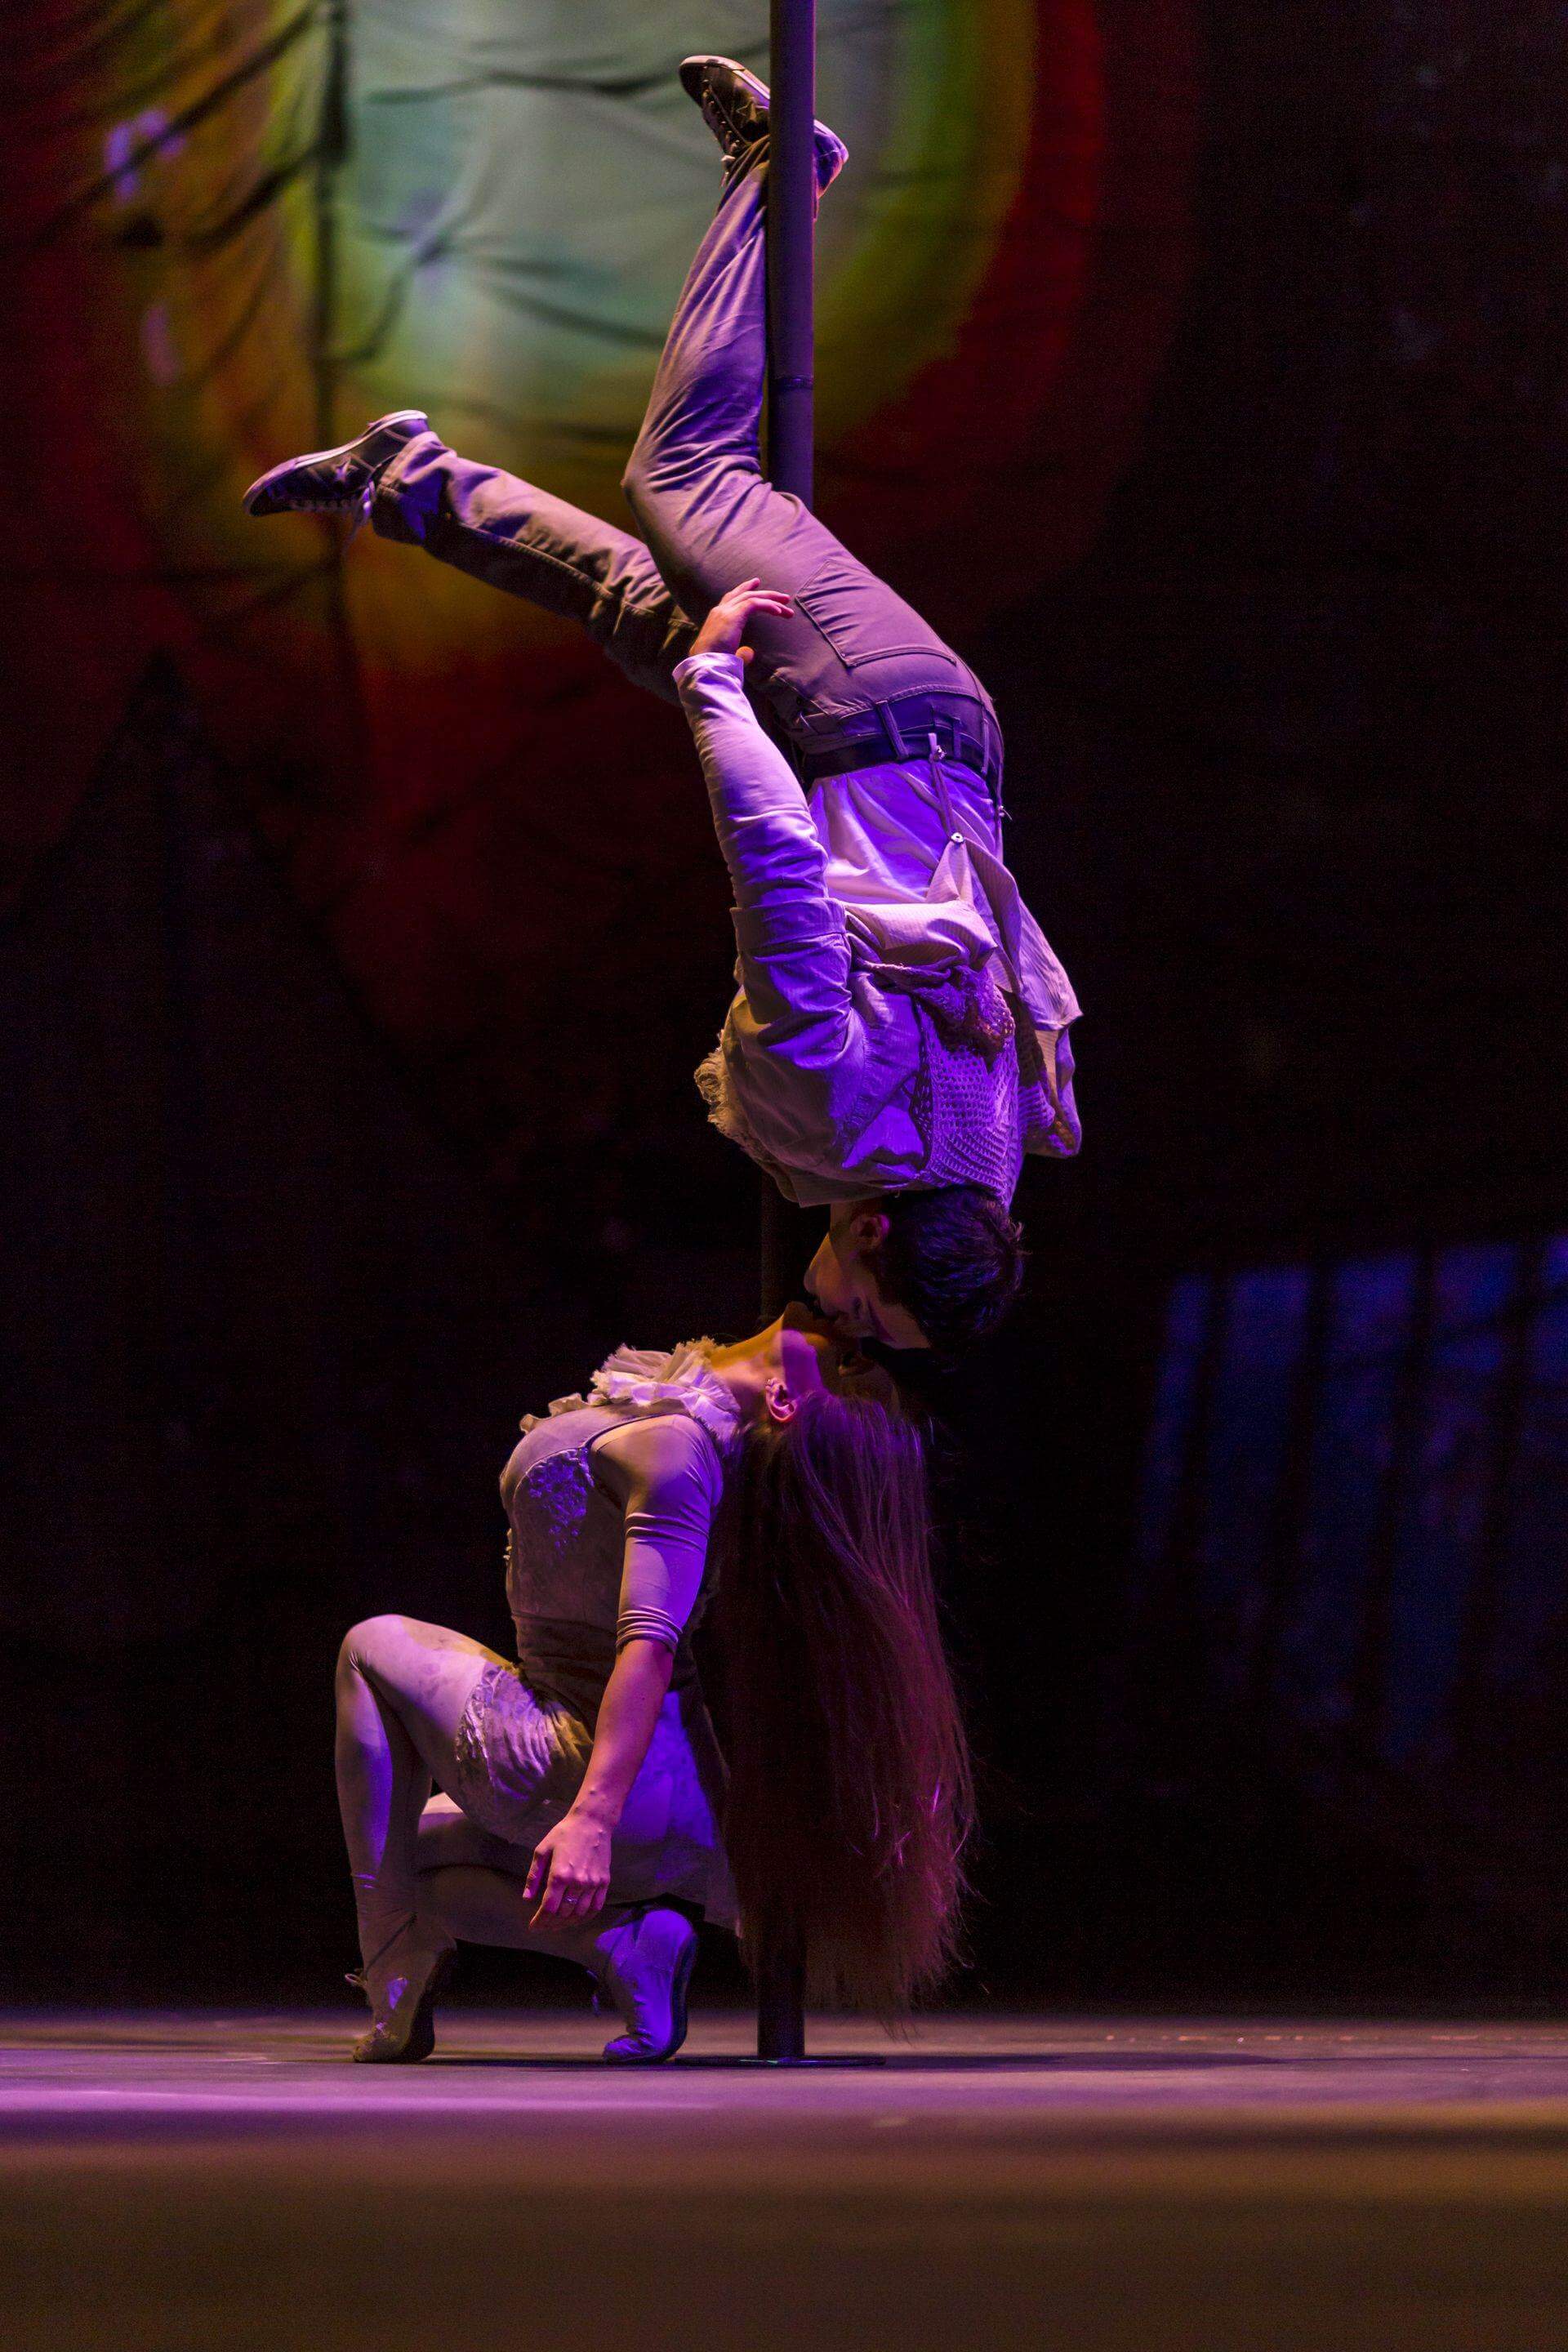 Scalada by Cirque du Soleil 2013: Vertical dance duet